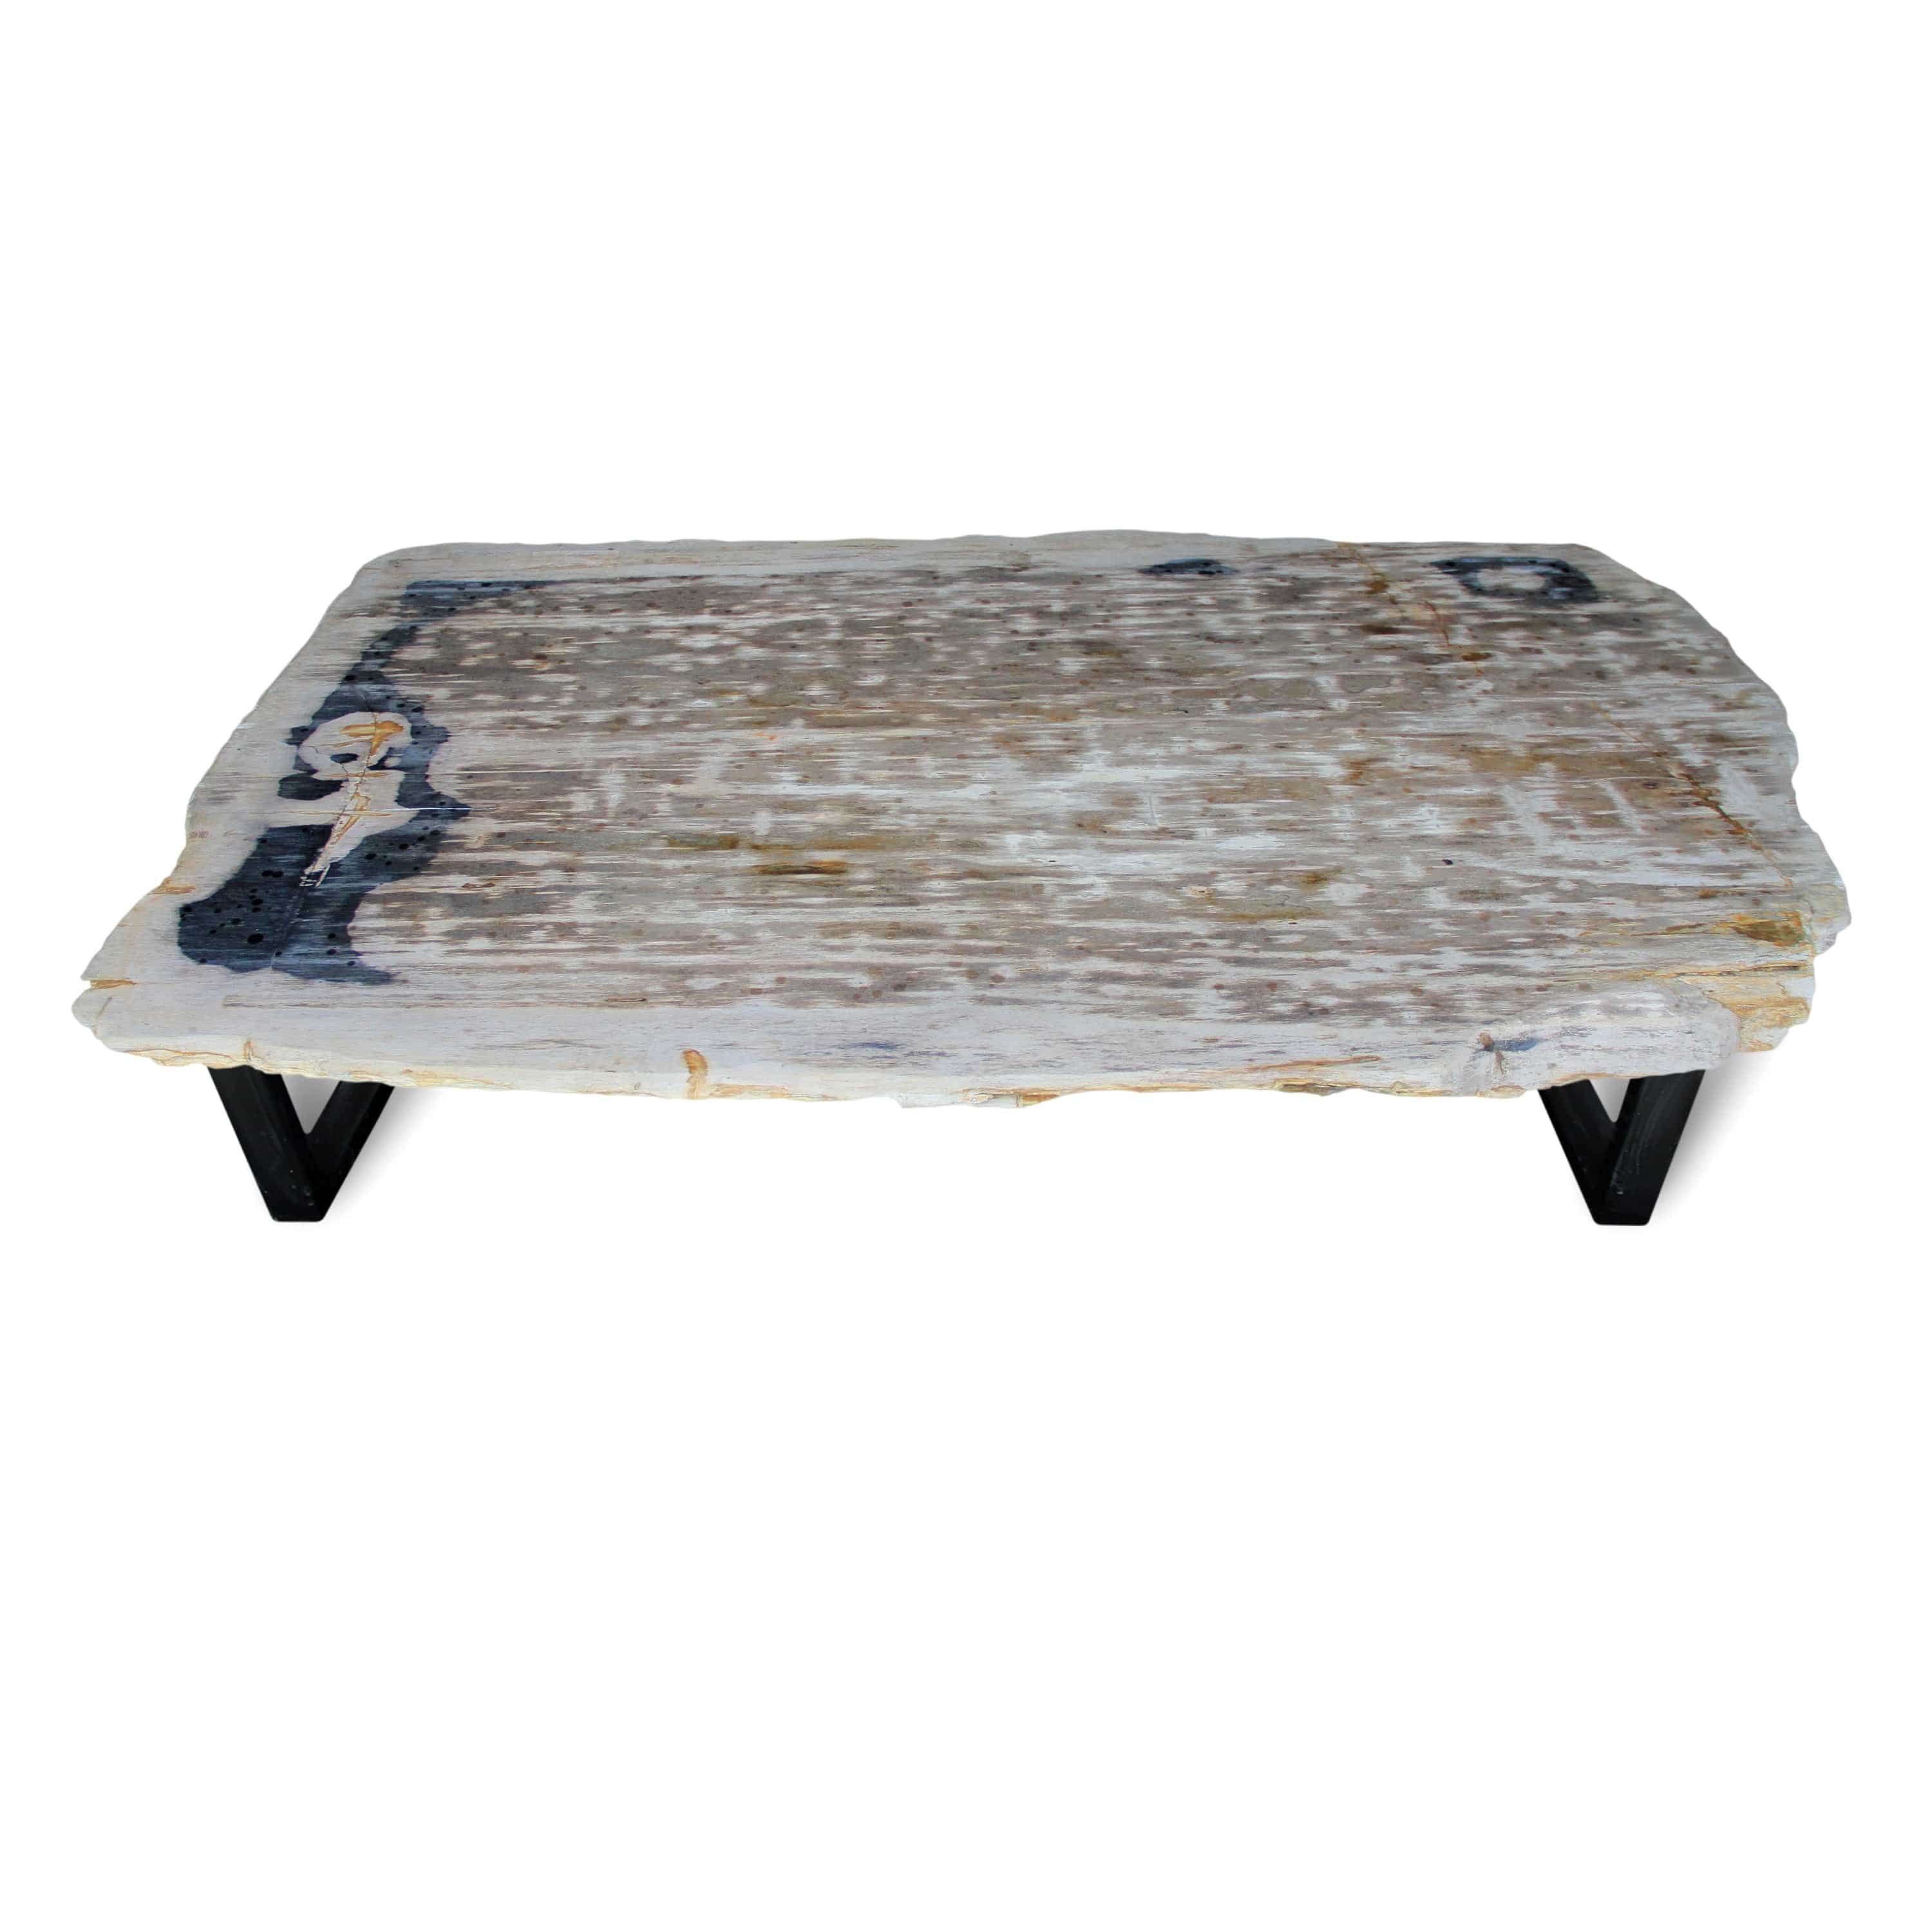 Kalifano Petrified Wood Polished Petrified Wood Table from Indonesia - 64" / 507 lbs PWR18400.001